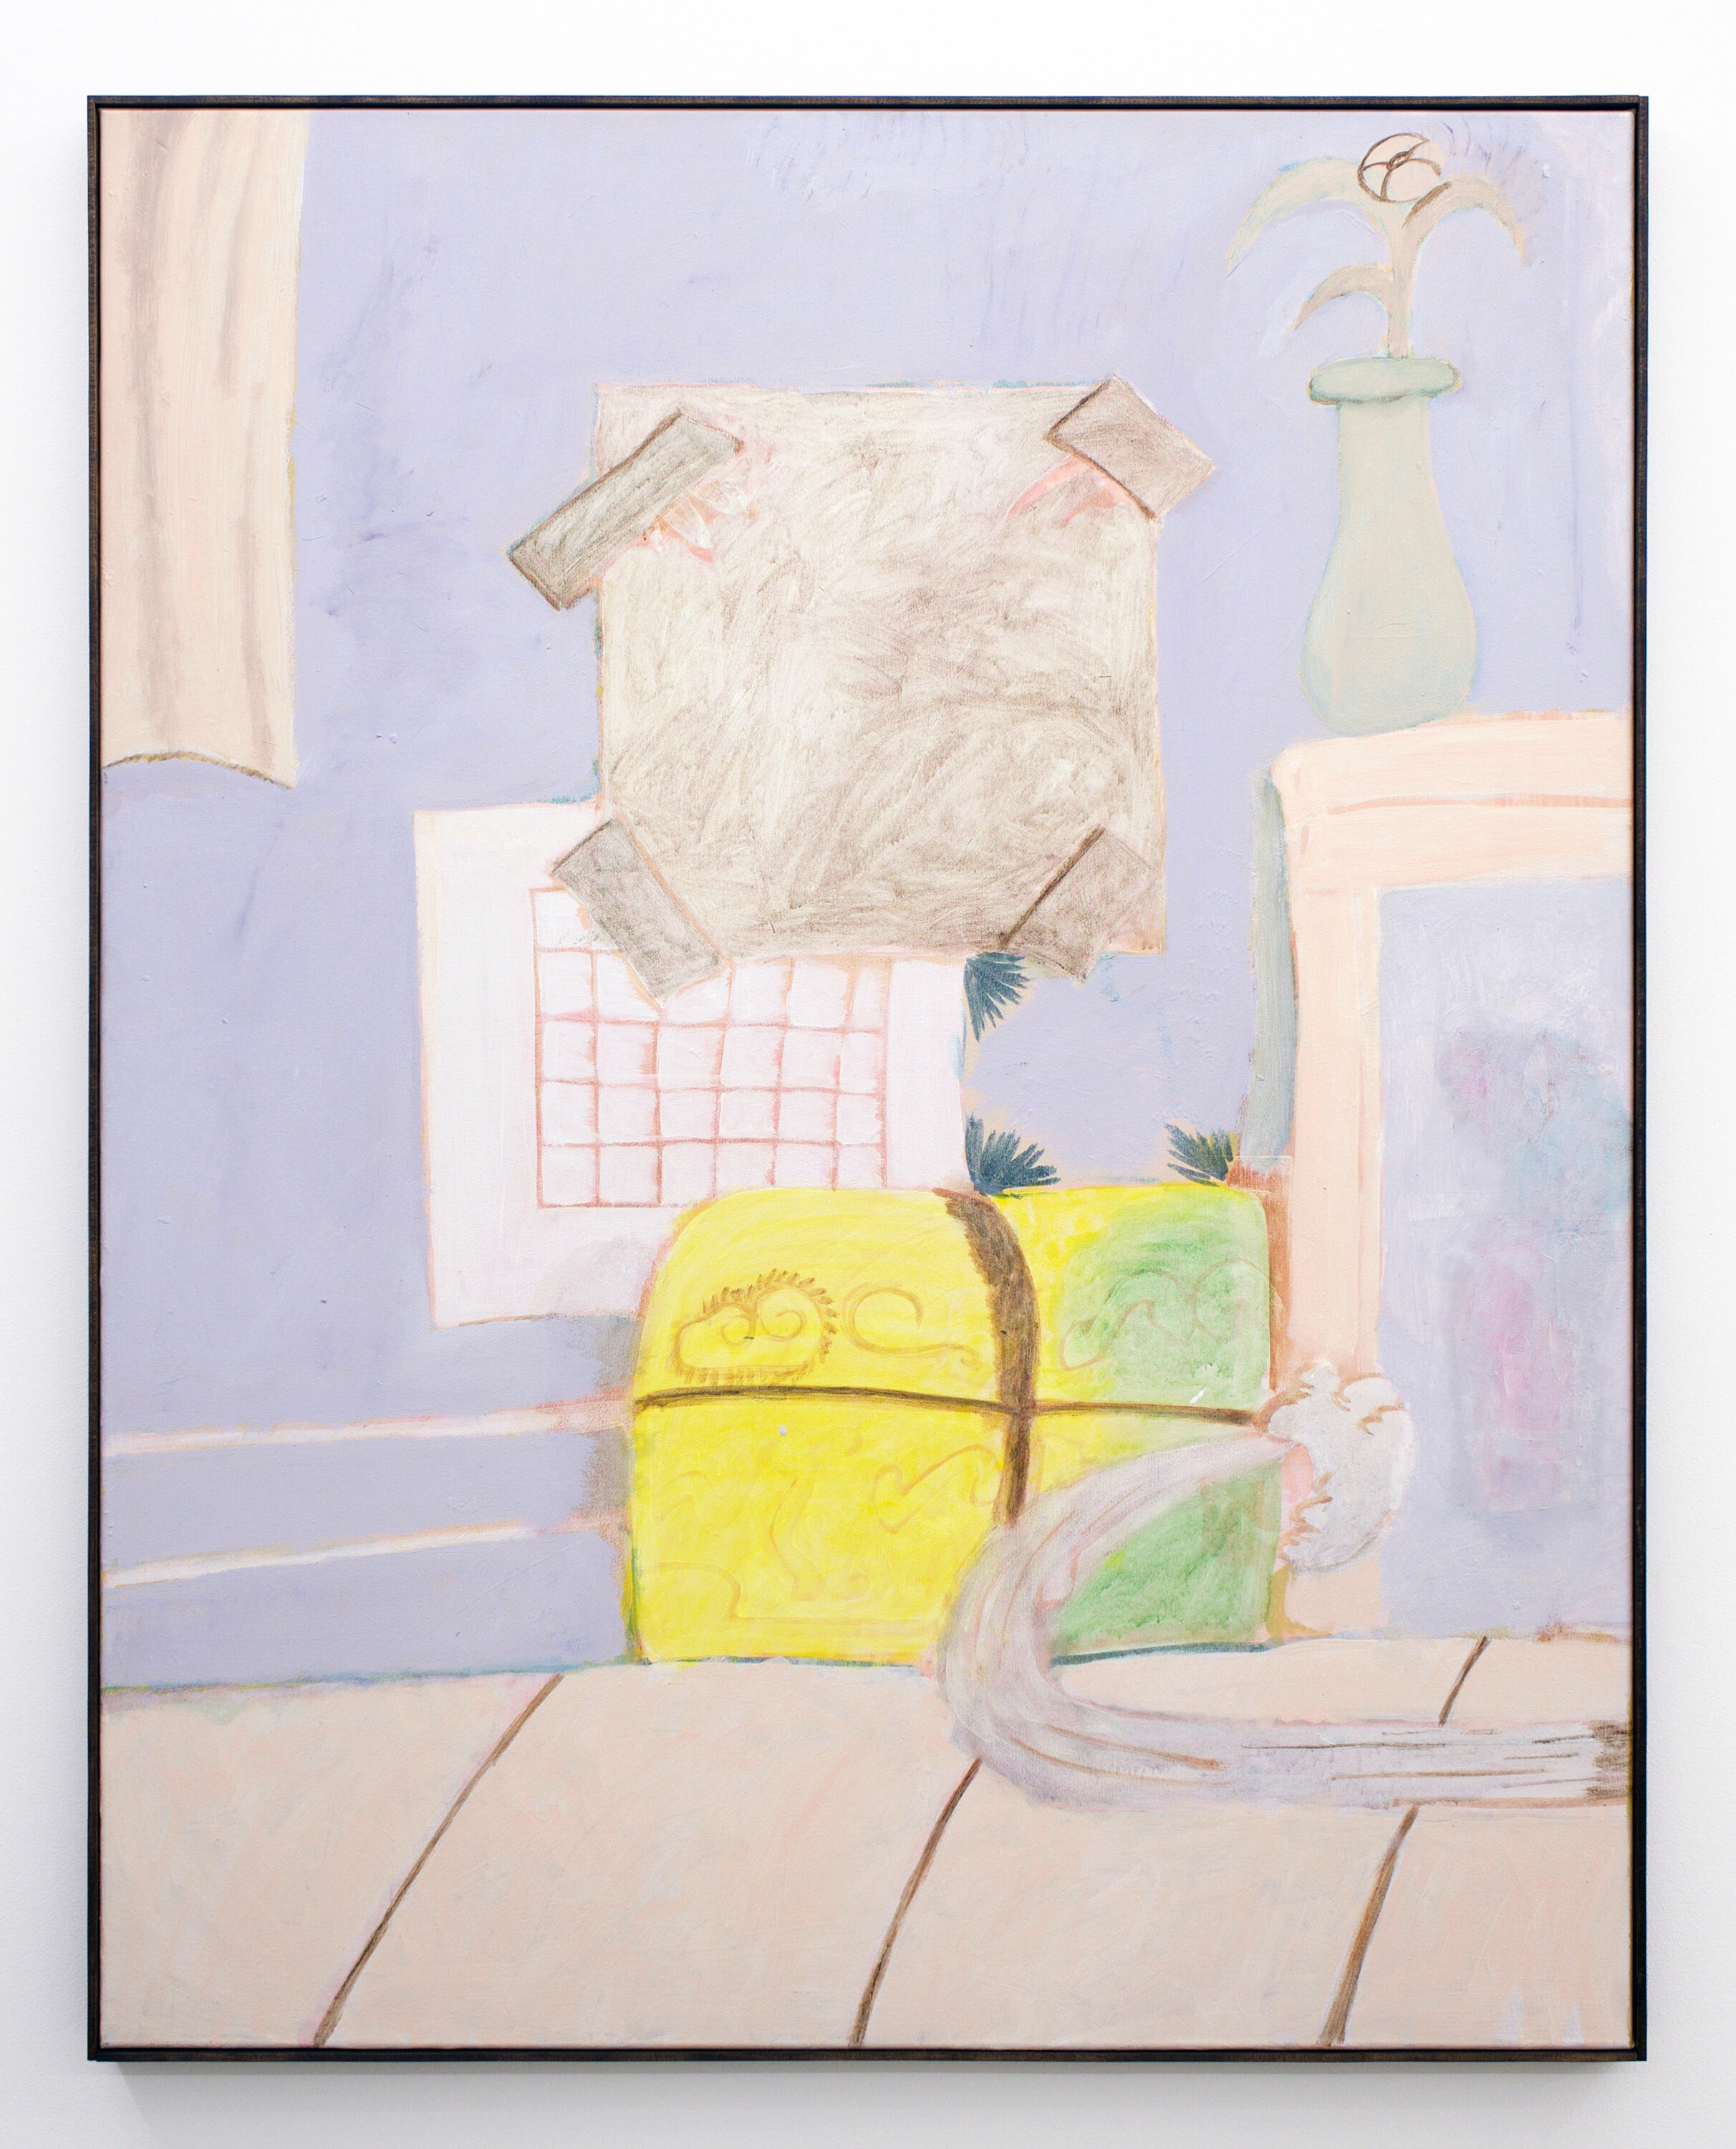  CHRISTOPH ROßNER  Holiday Matisse II , 2018-19 acrylic on canvas 47” x 37.5” 